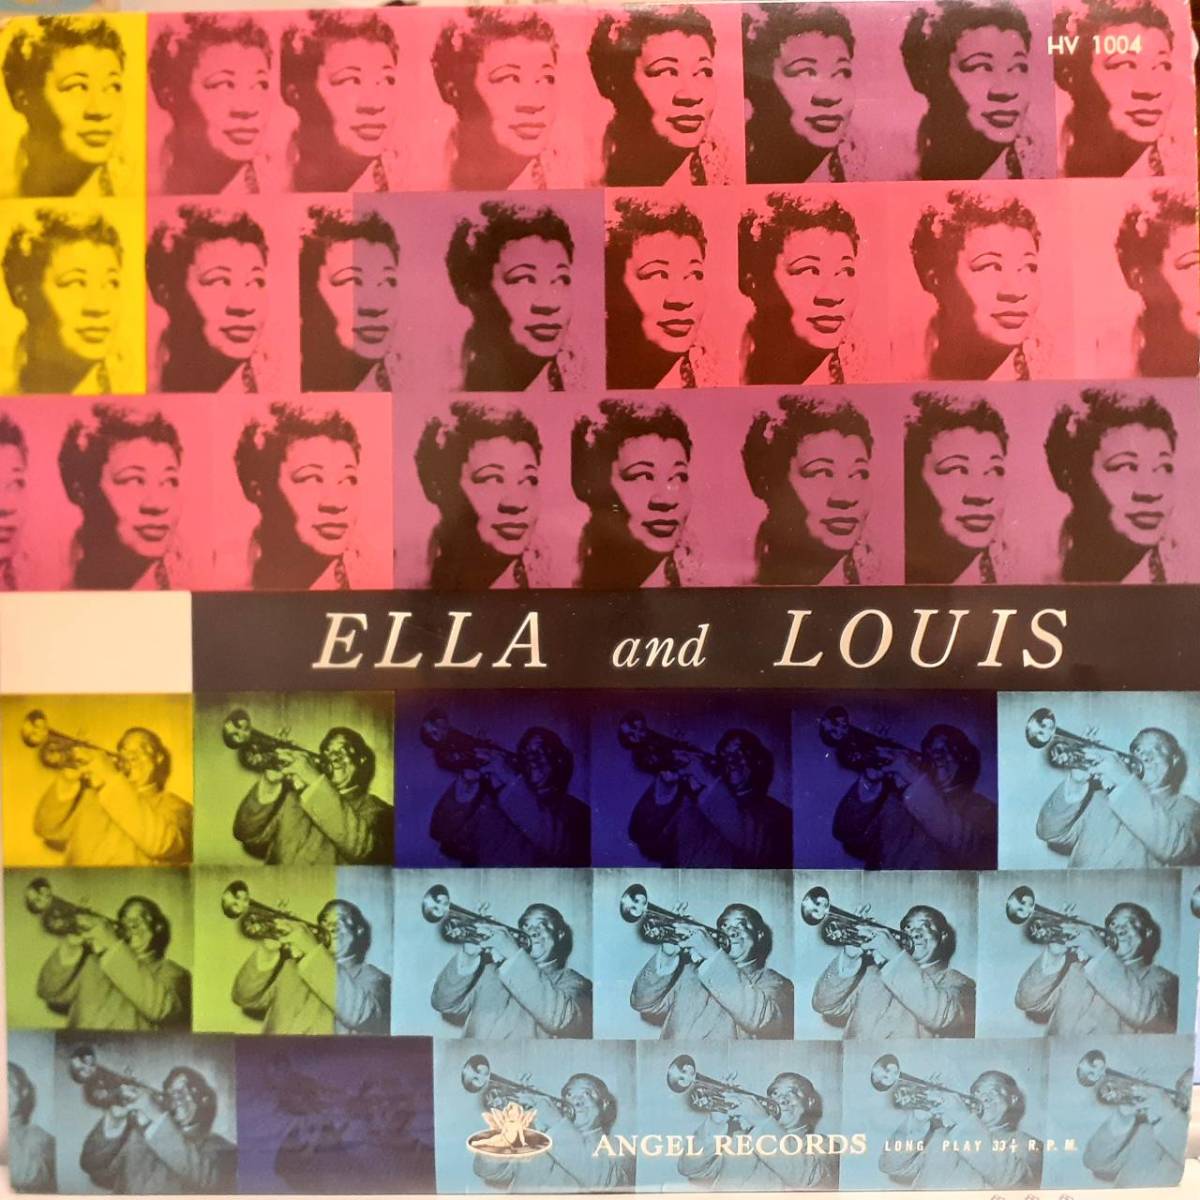 50'sプレス！日本ANGEL(Verve)オリジLP！Ella Fitzgerald & Louis Armstrong / Ella And Louis 1957年 東芝 HV 1004 ジャケ違い！MG V-4003_画像1